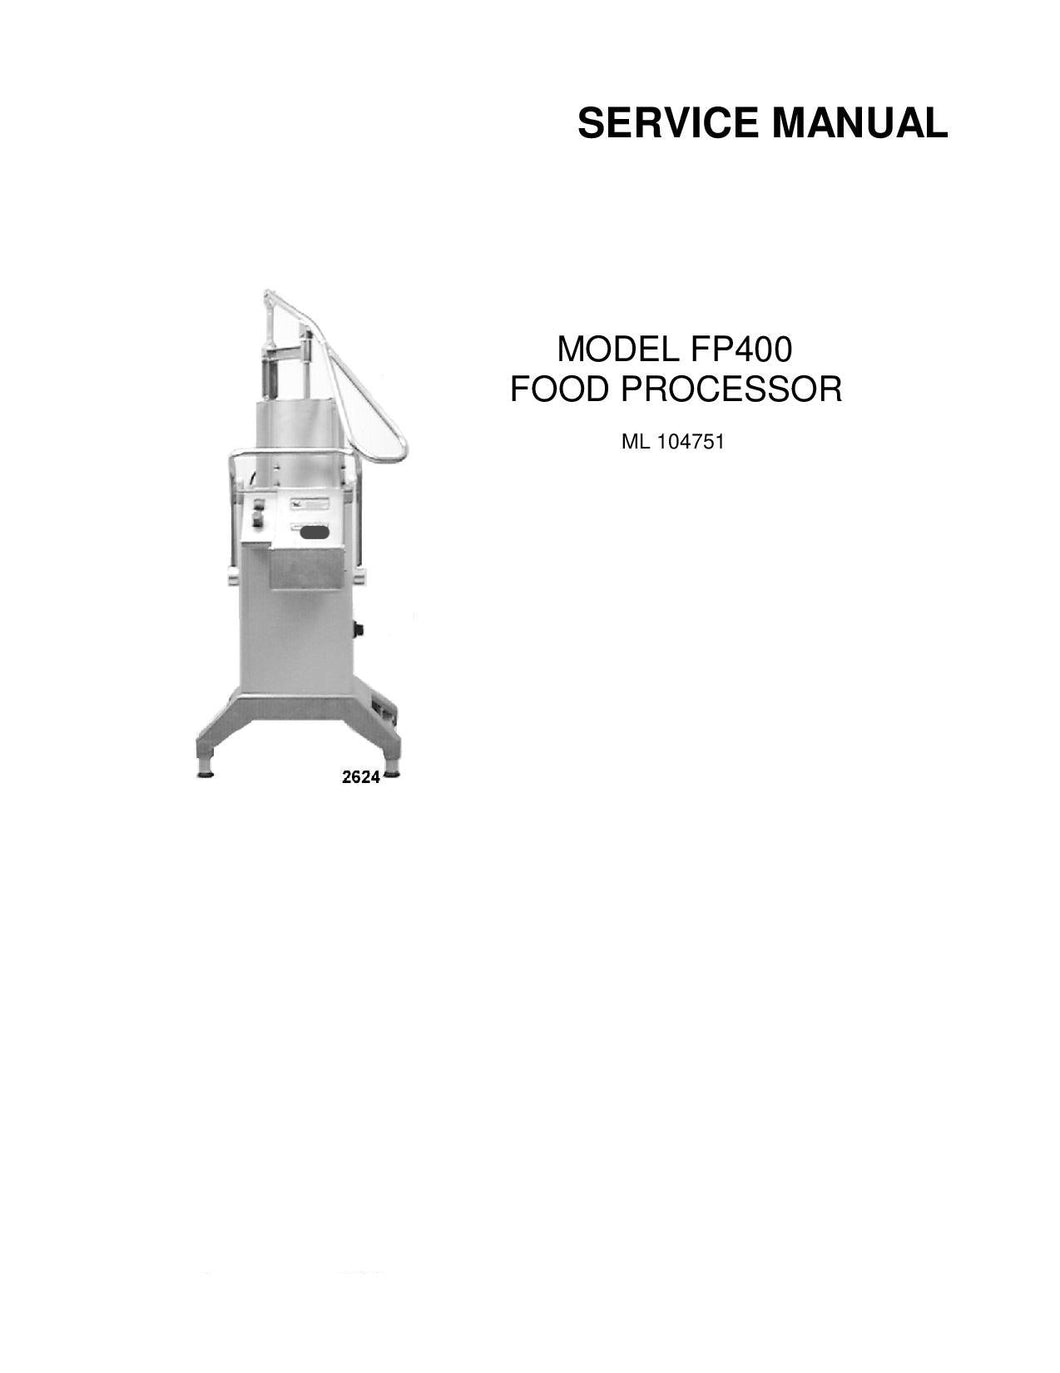 HOBART MODEL FP400 FOOD PROCESSOR SERVICE, TECHNICAL AND REPAIR MANUALS PDF